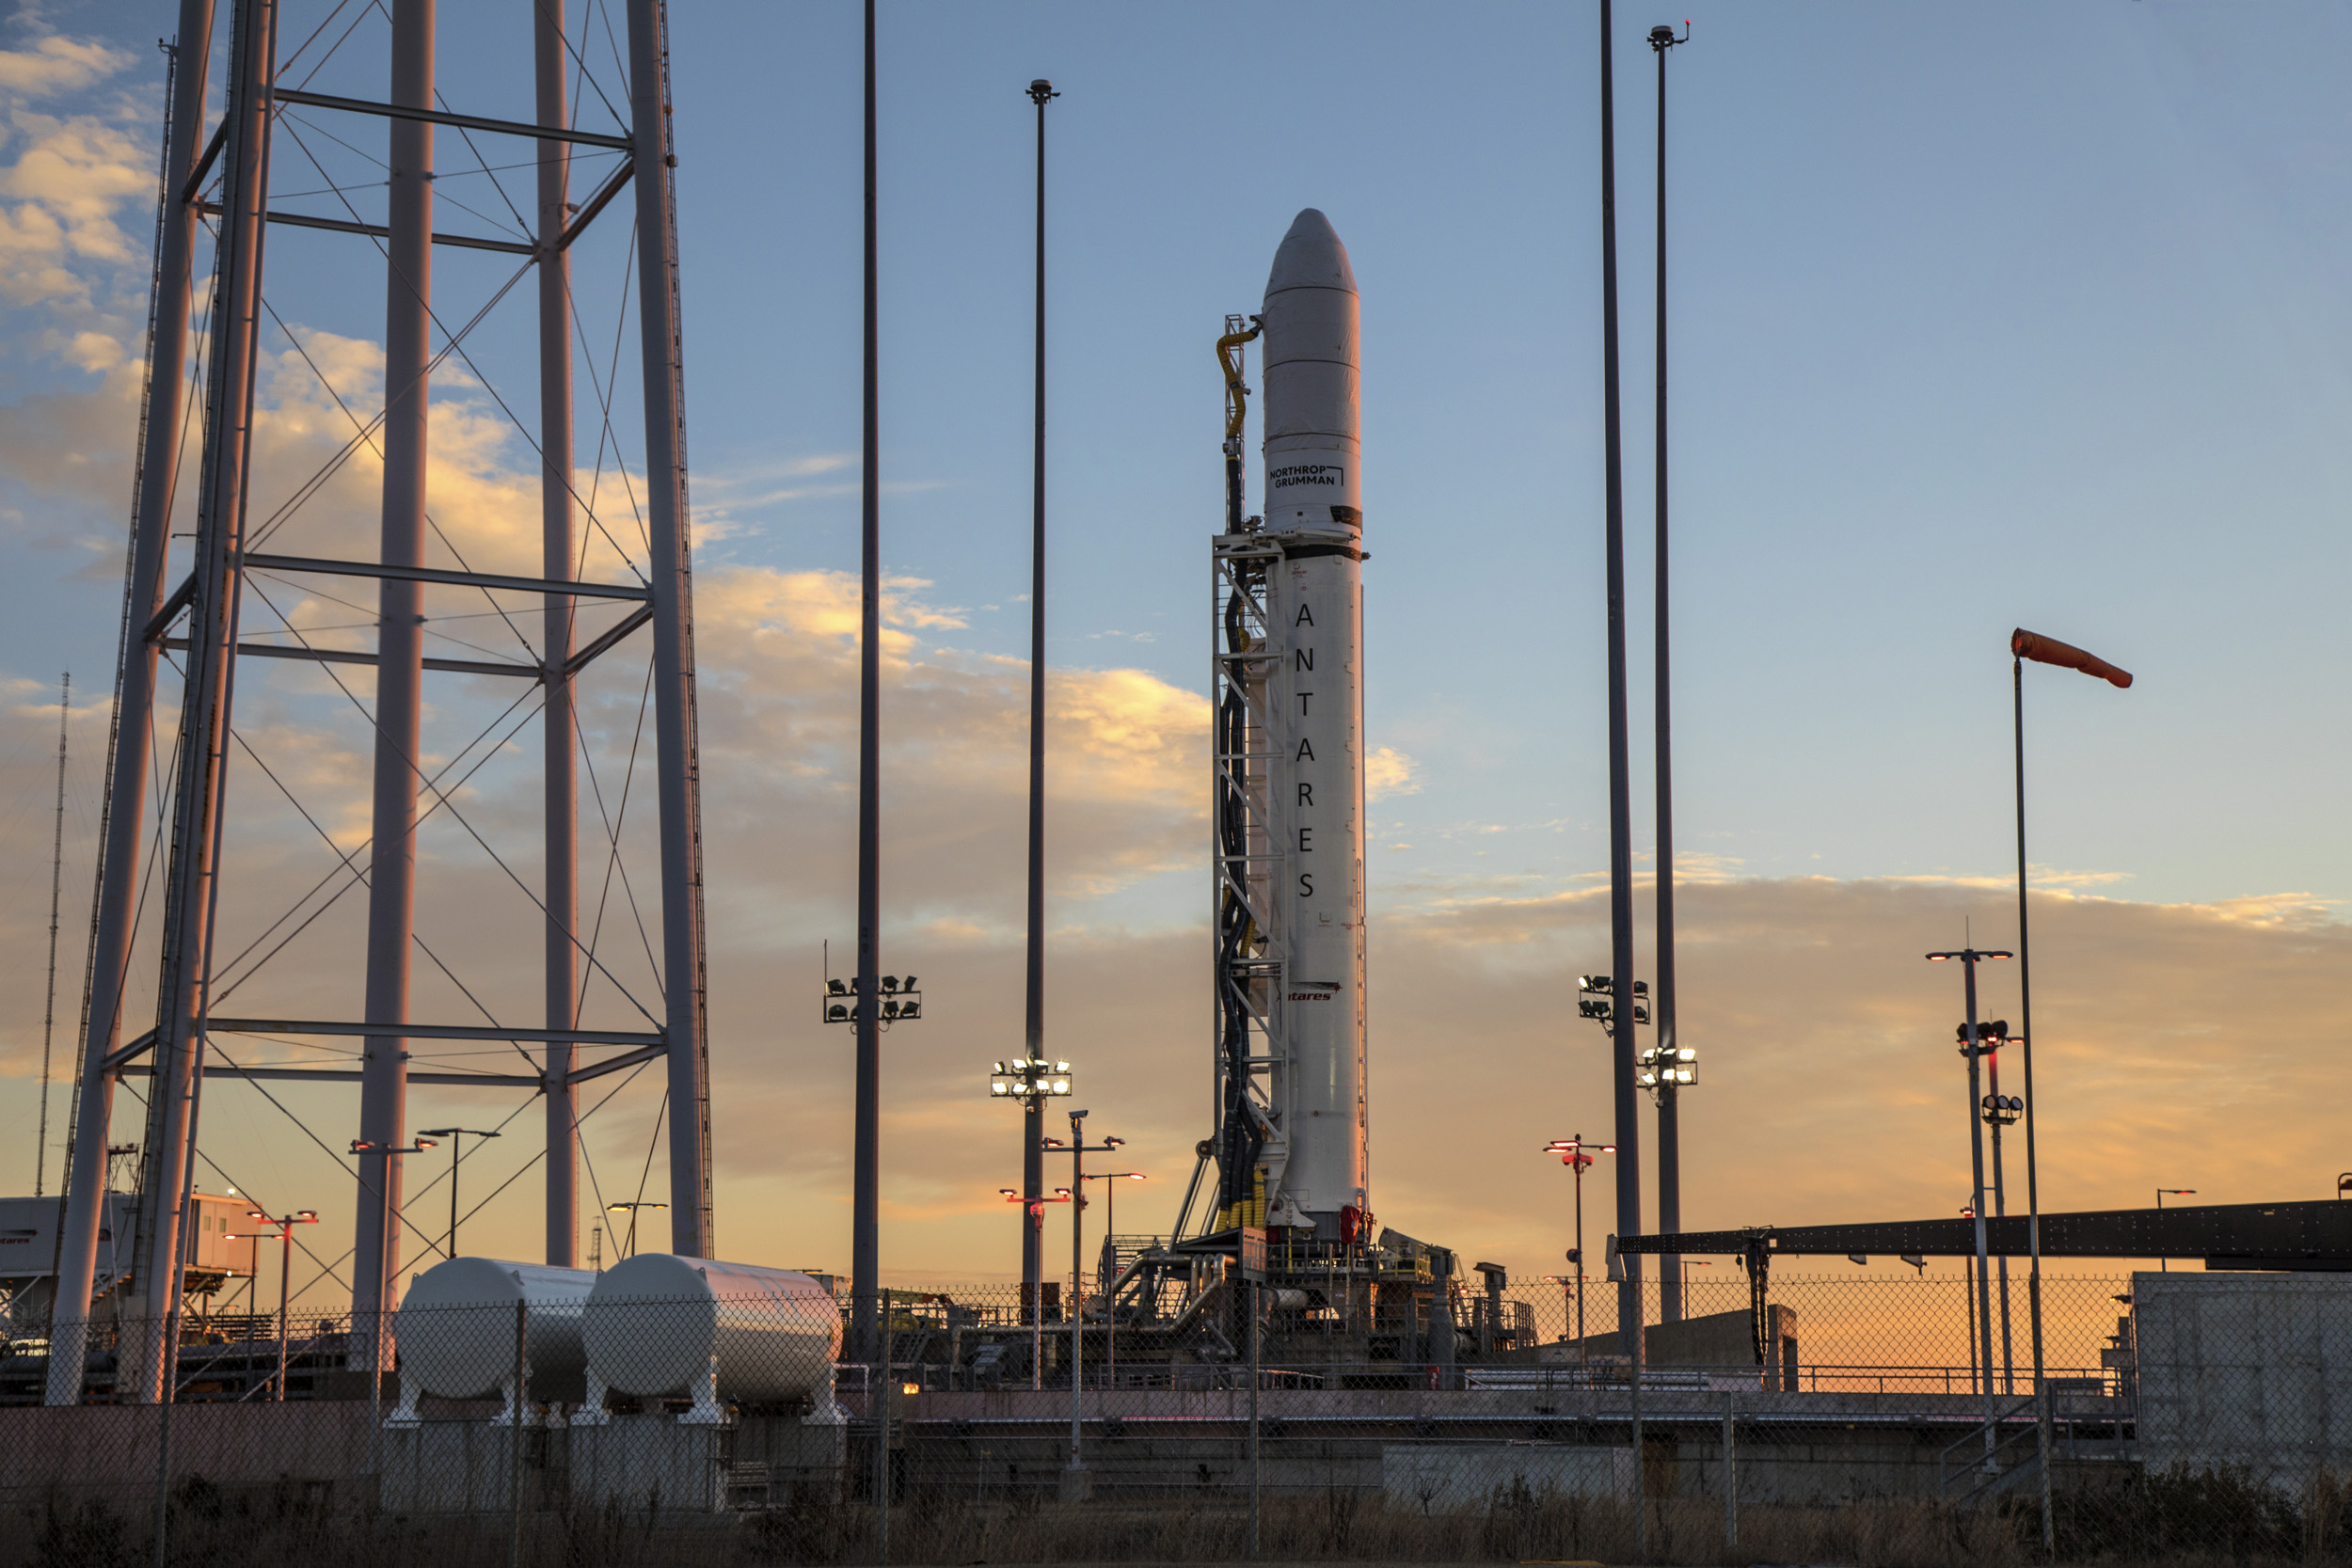 Northrop Grumman antares rocket on launch pad